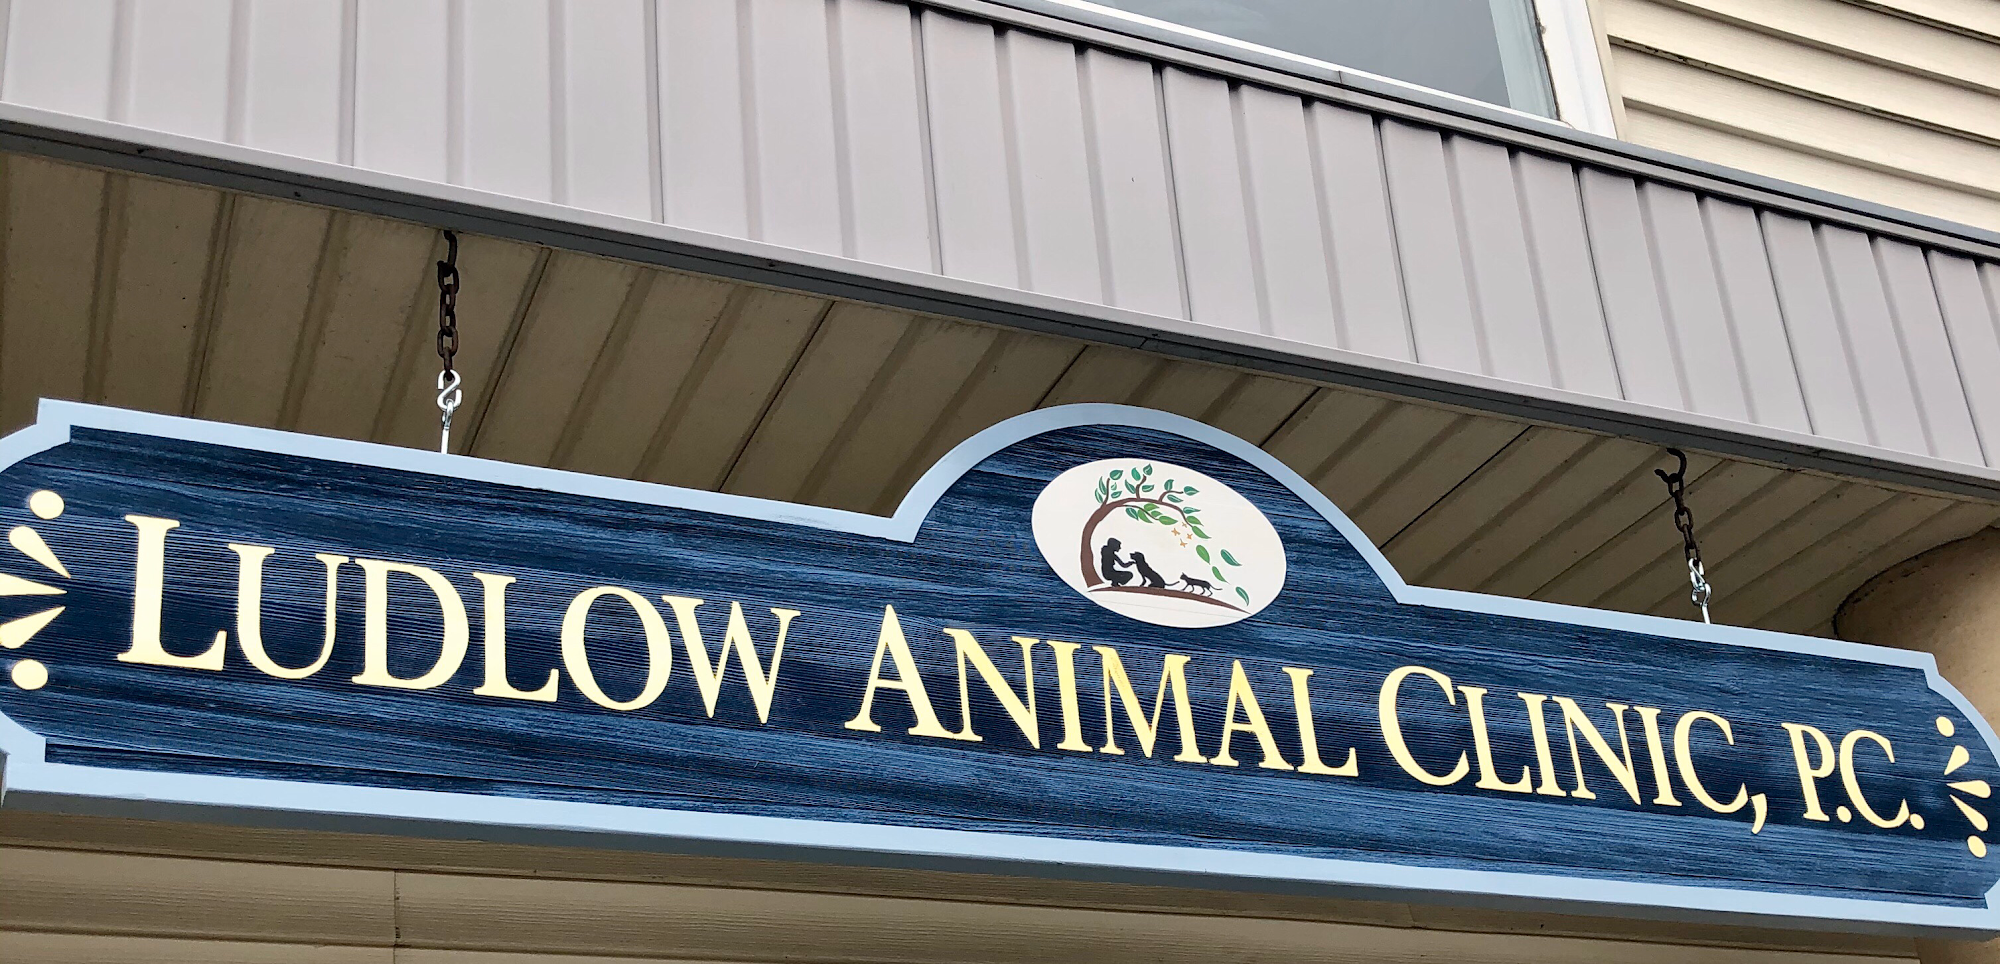 Ludlow Animal Clinic, P.C.